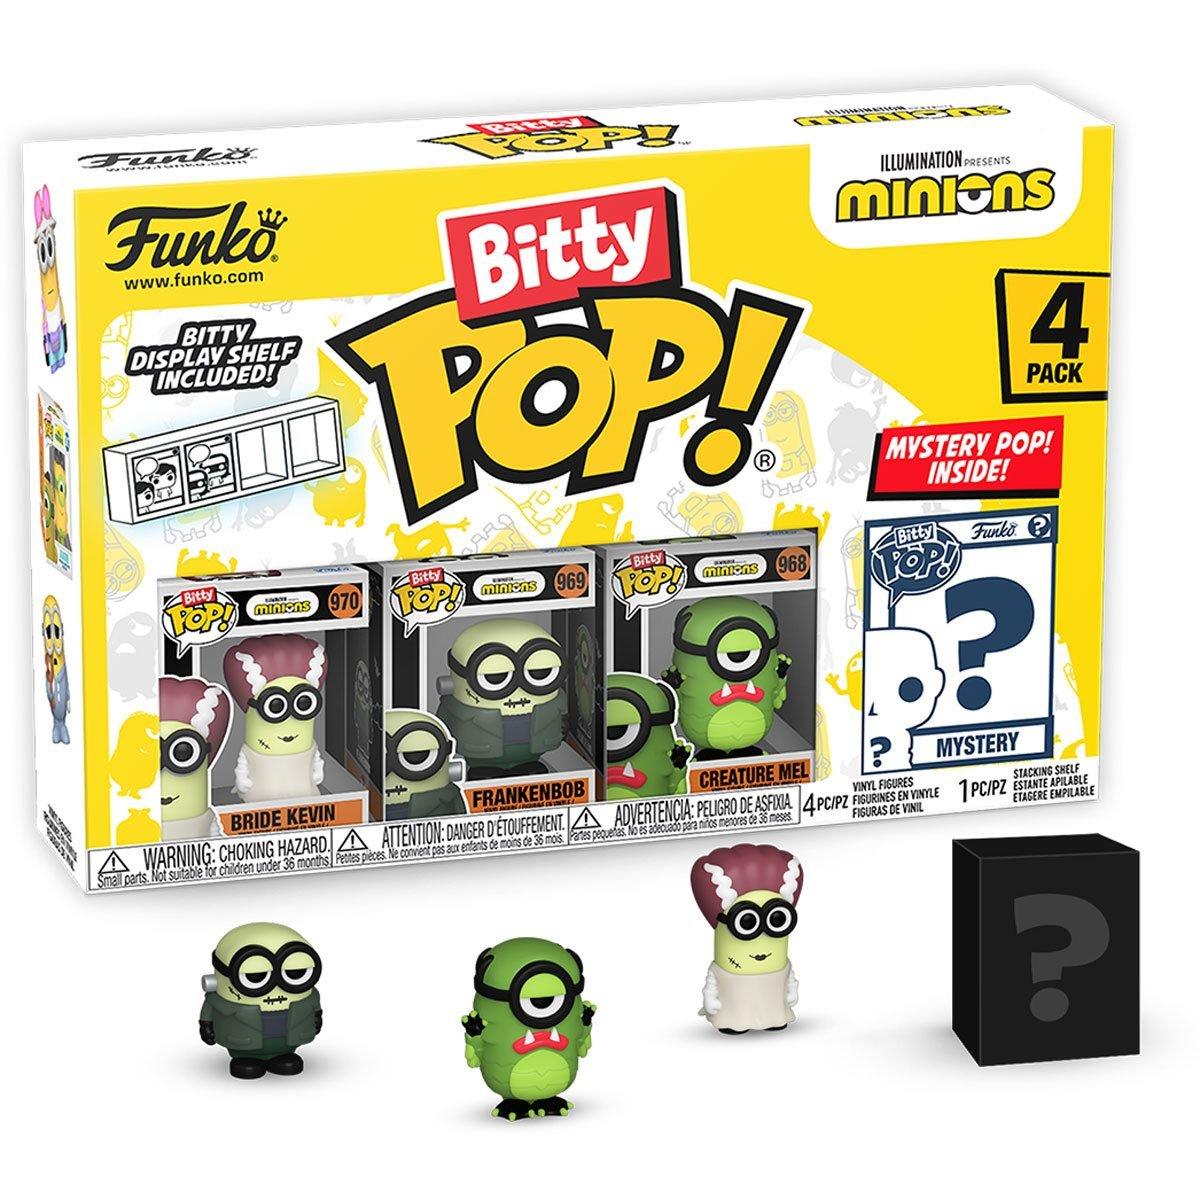 Minions - Frankenbob Funko Bitty Pop! 4-Pack